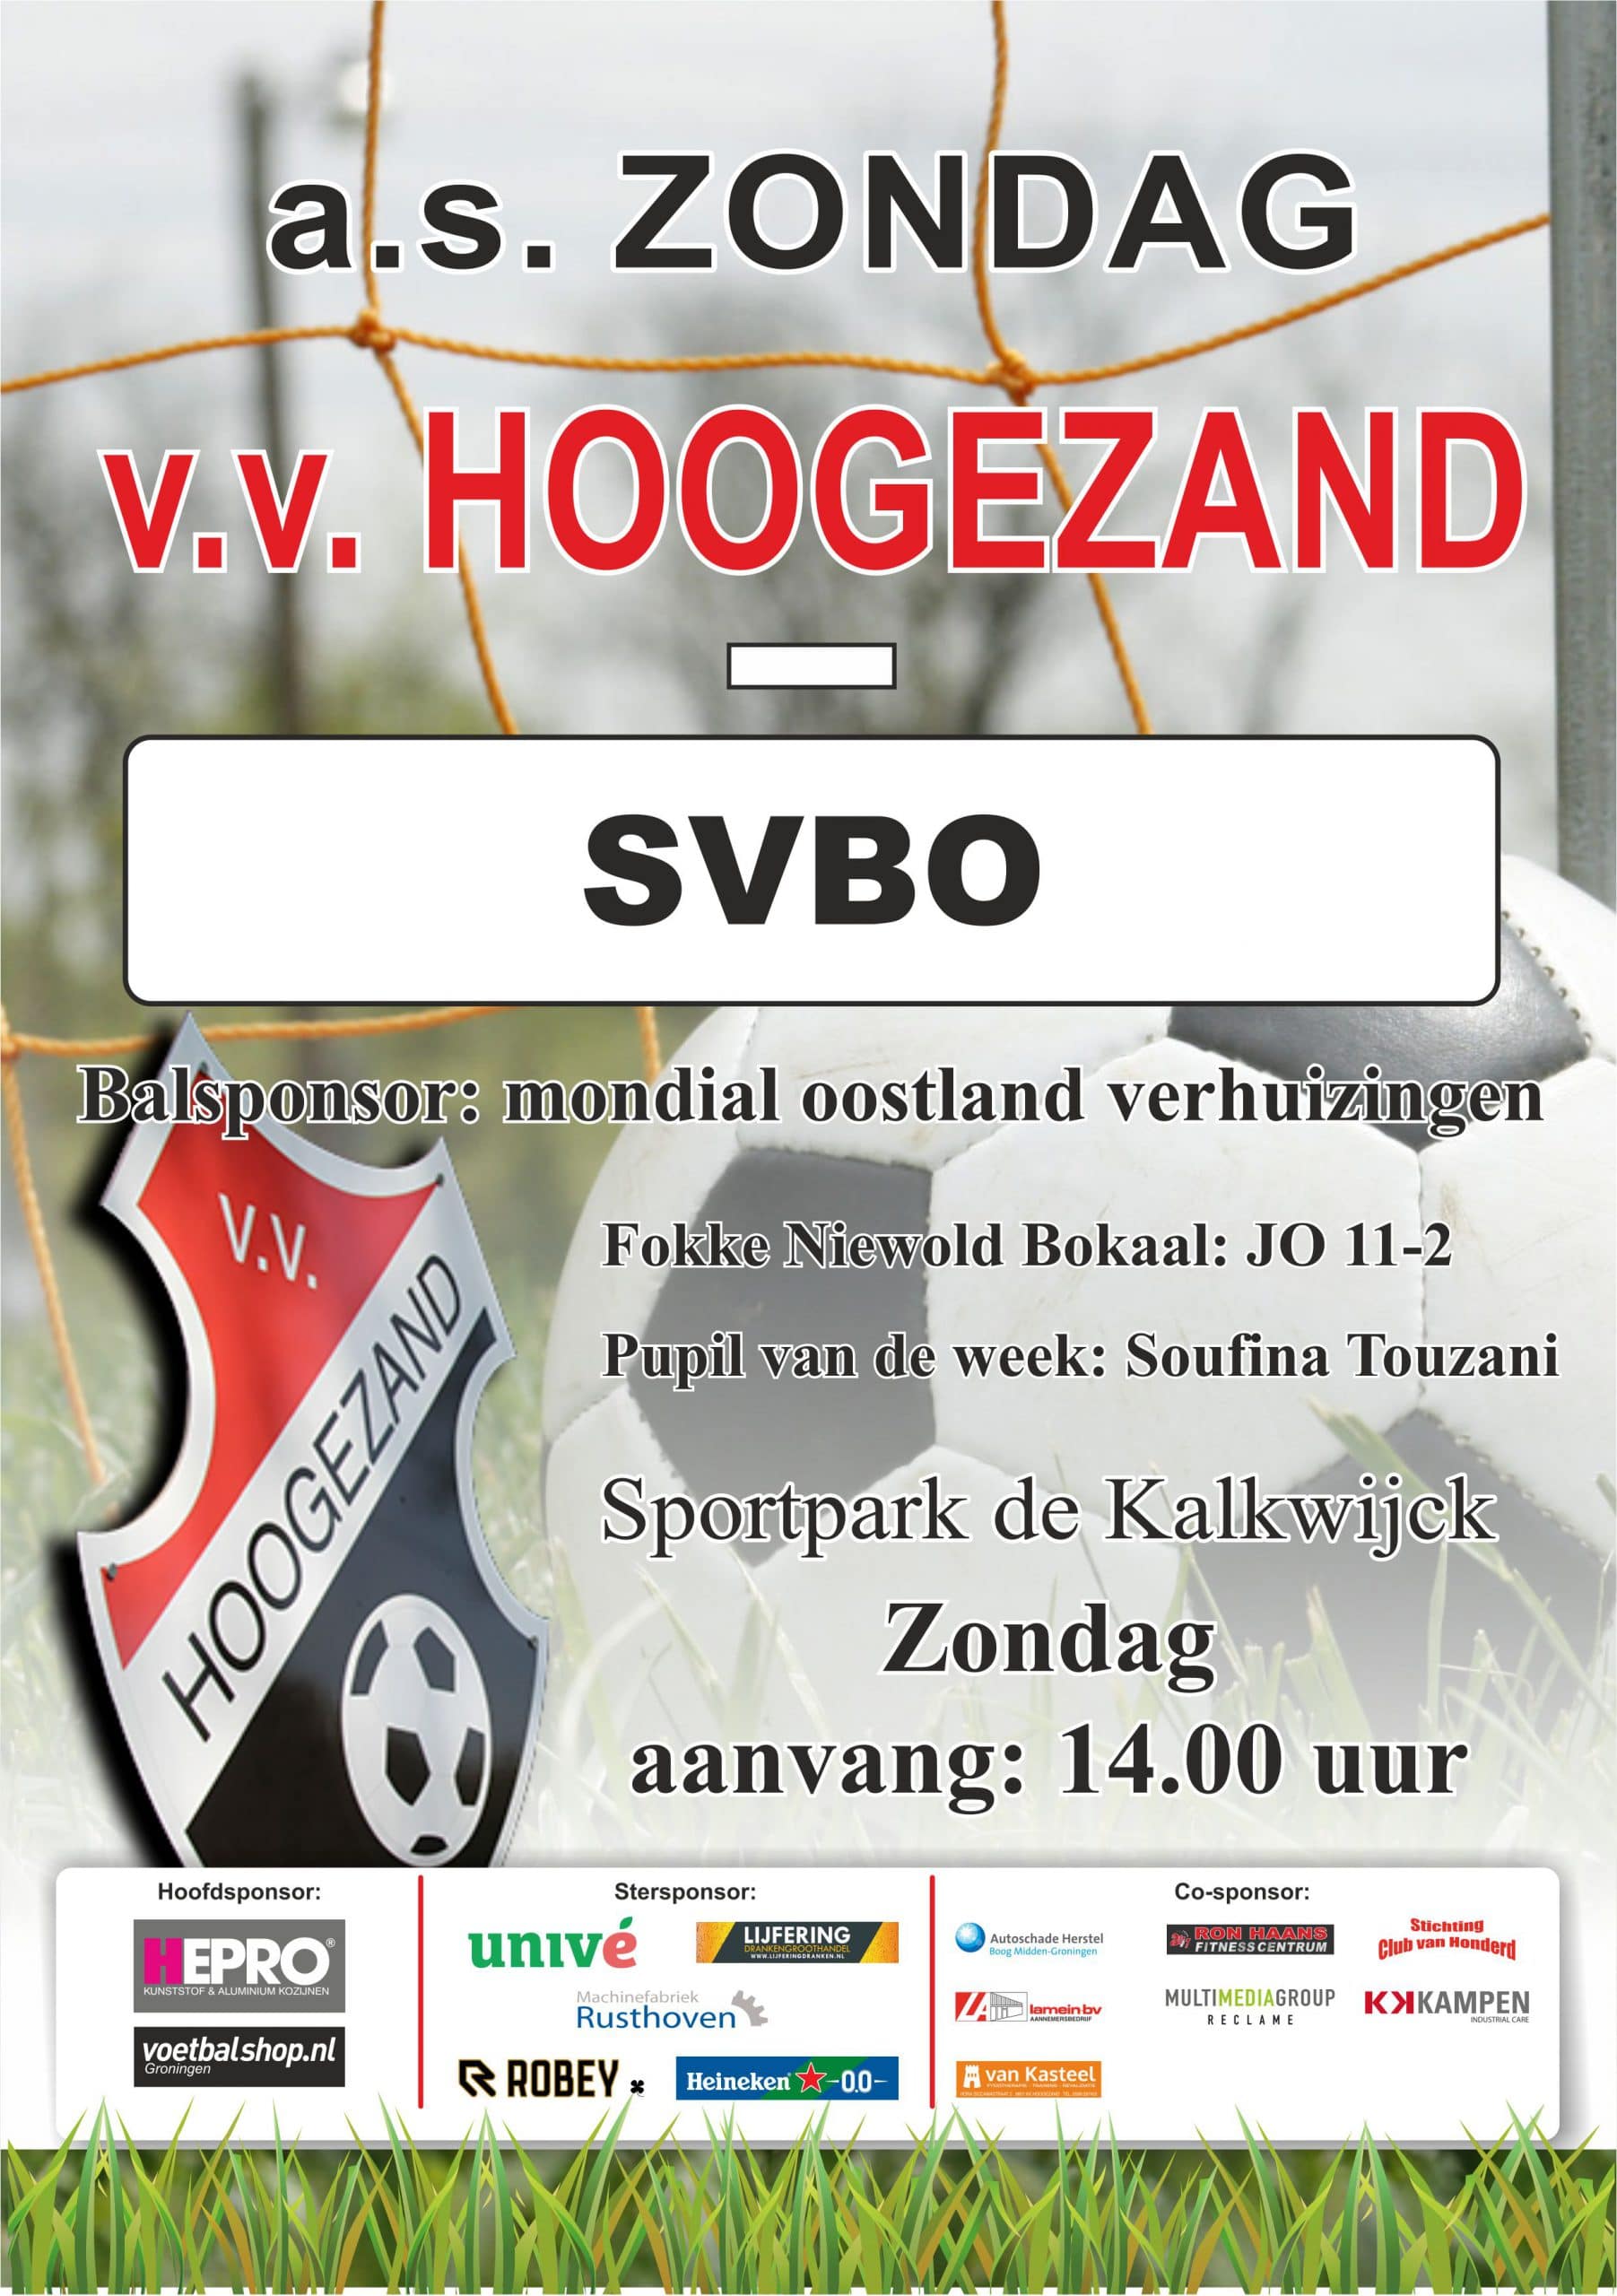 Mondial Oostland Verhuizingen balsponsor wedstrijd v.v. Hoogezand - SVBO